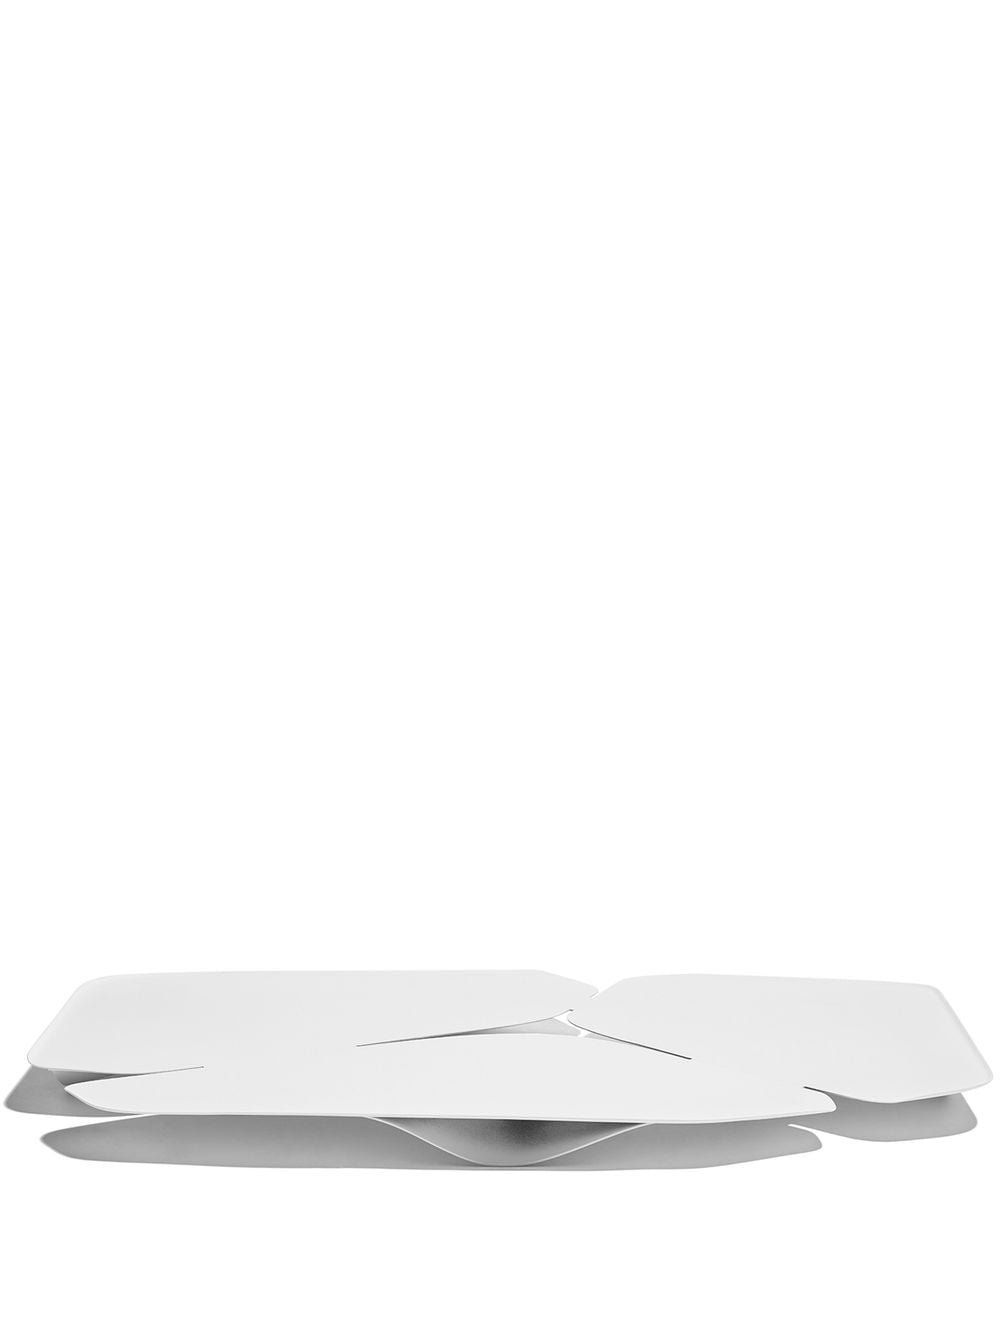 Zaha Hadid Design Hew stainless steel tray - White von Zaha Hadid Design